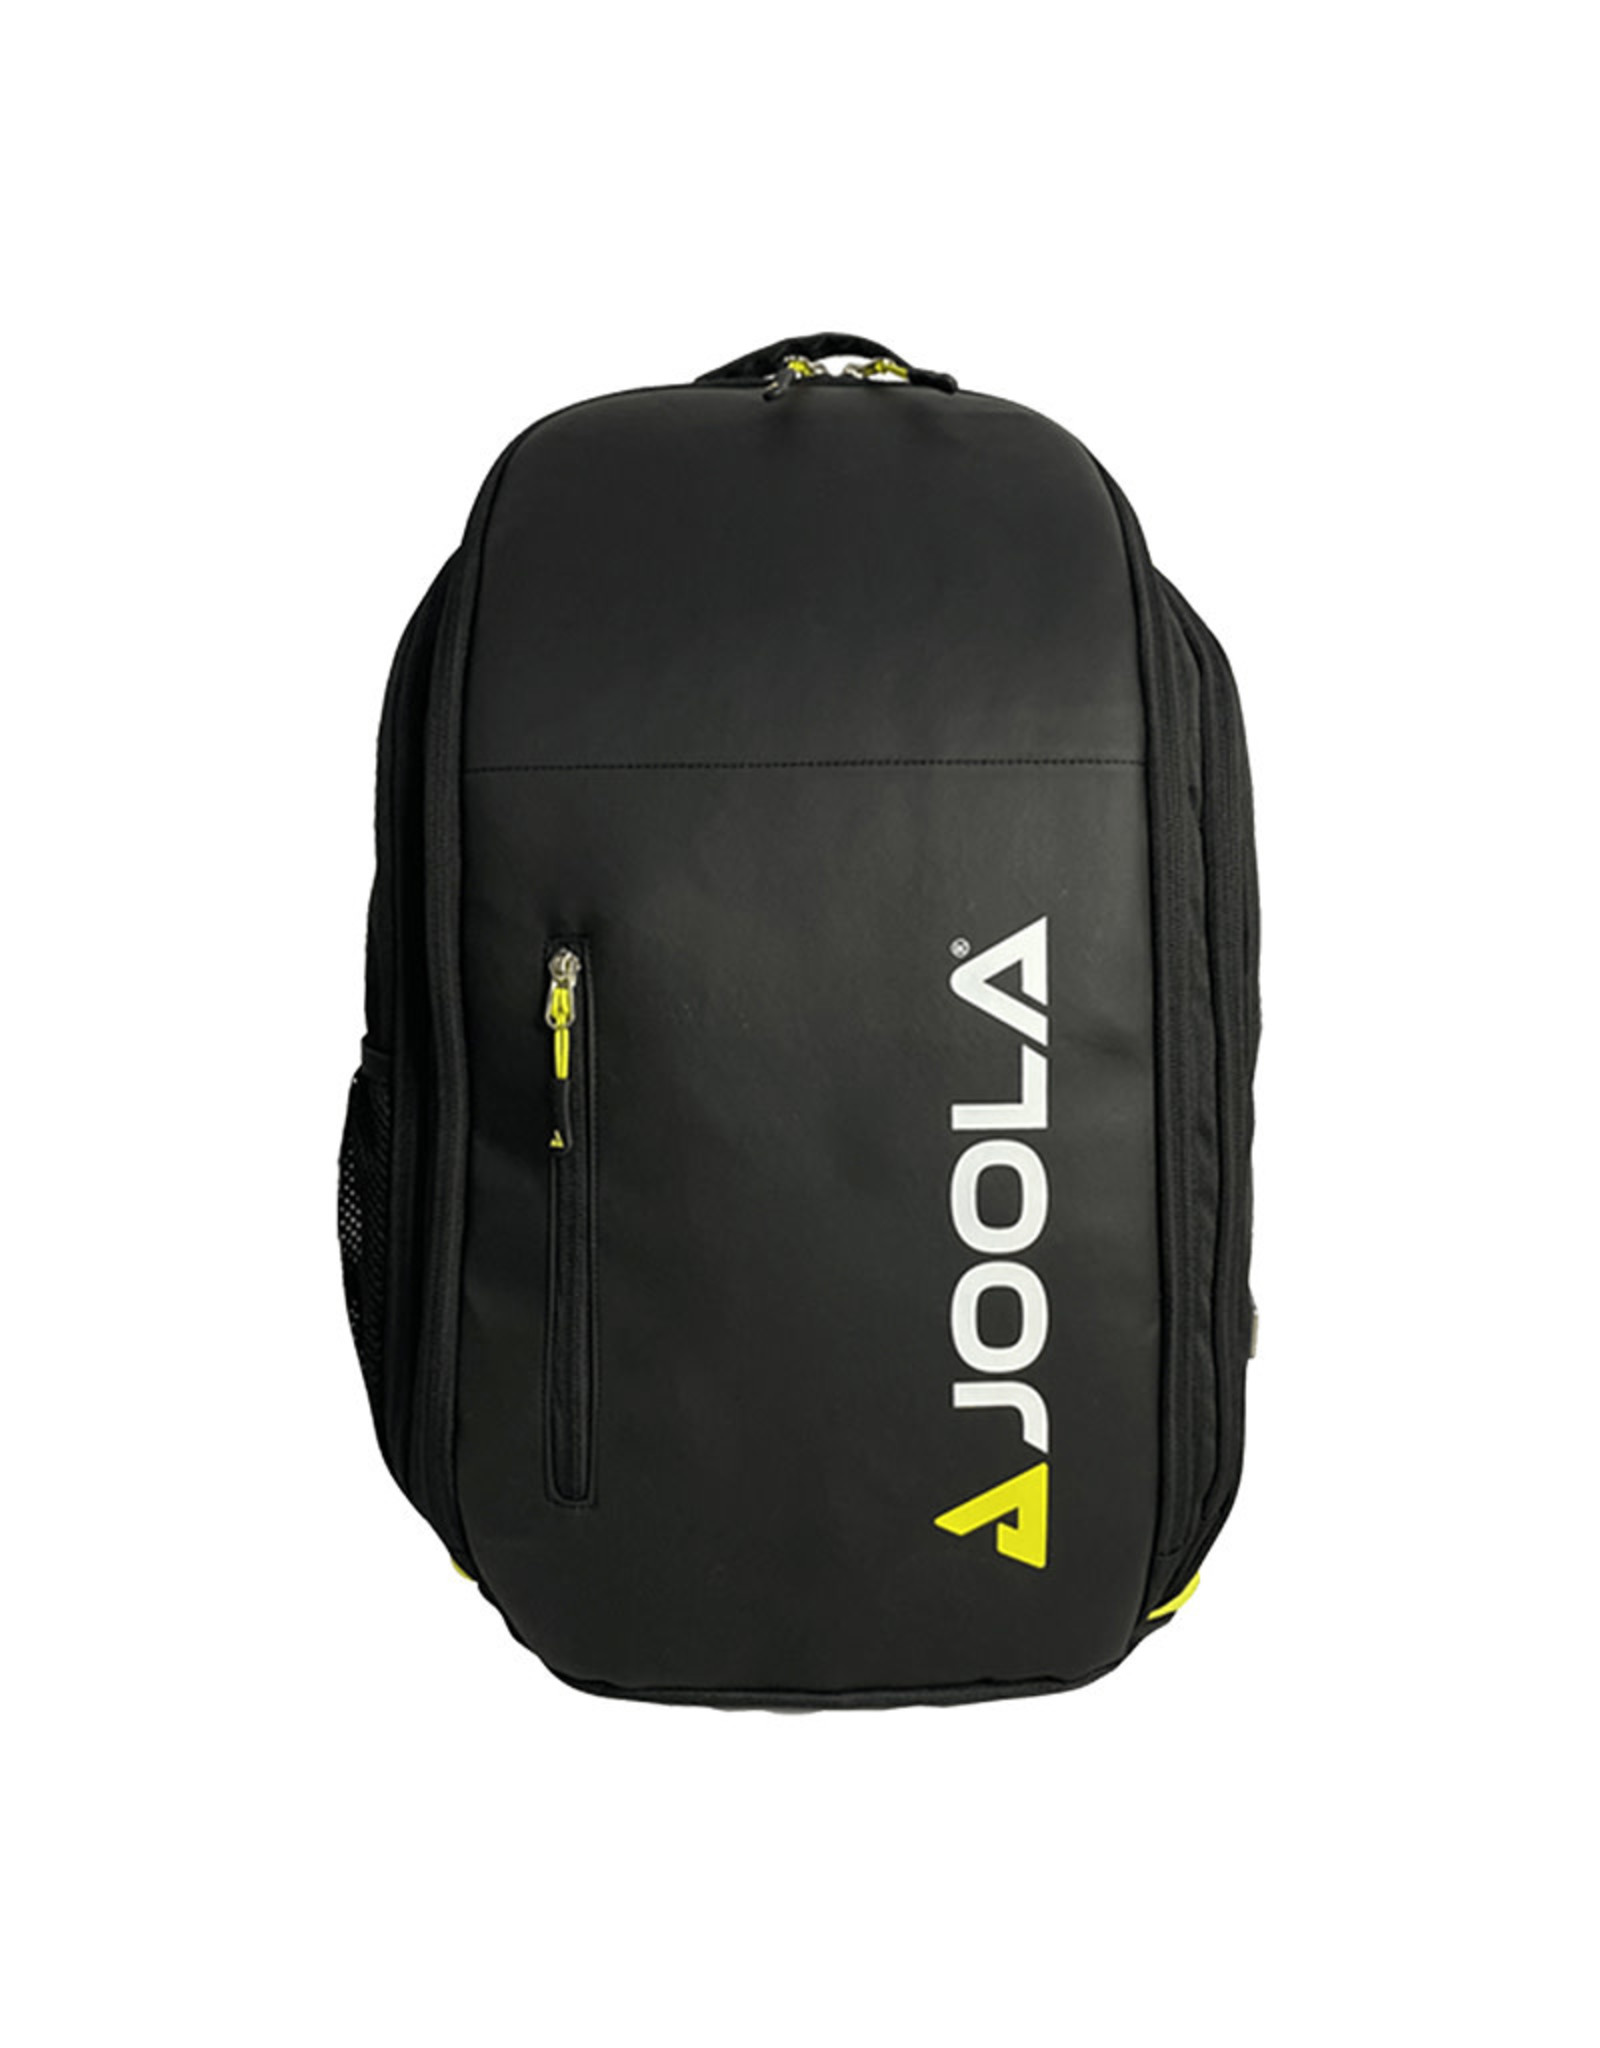 Joola Joola Vision II Backpack (Black/Yellow) Pickleball Bag